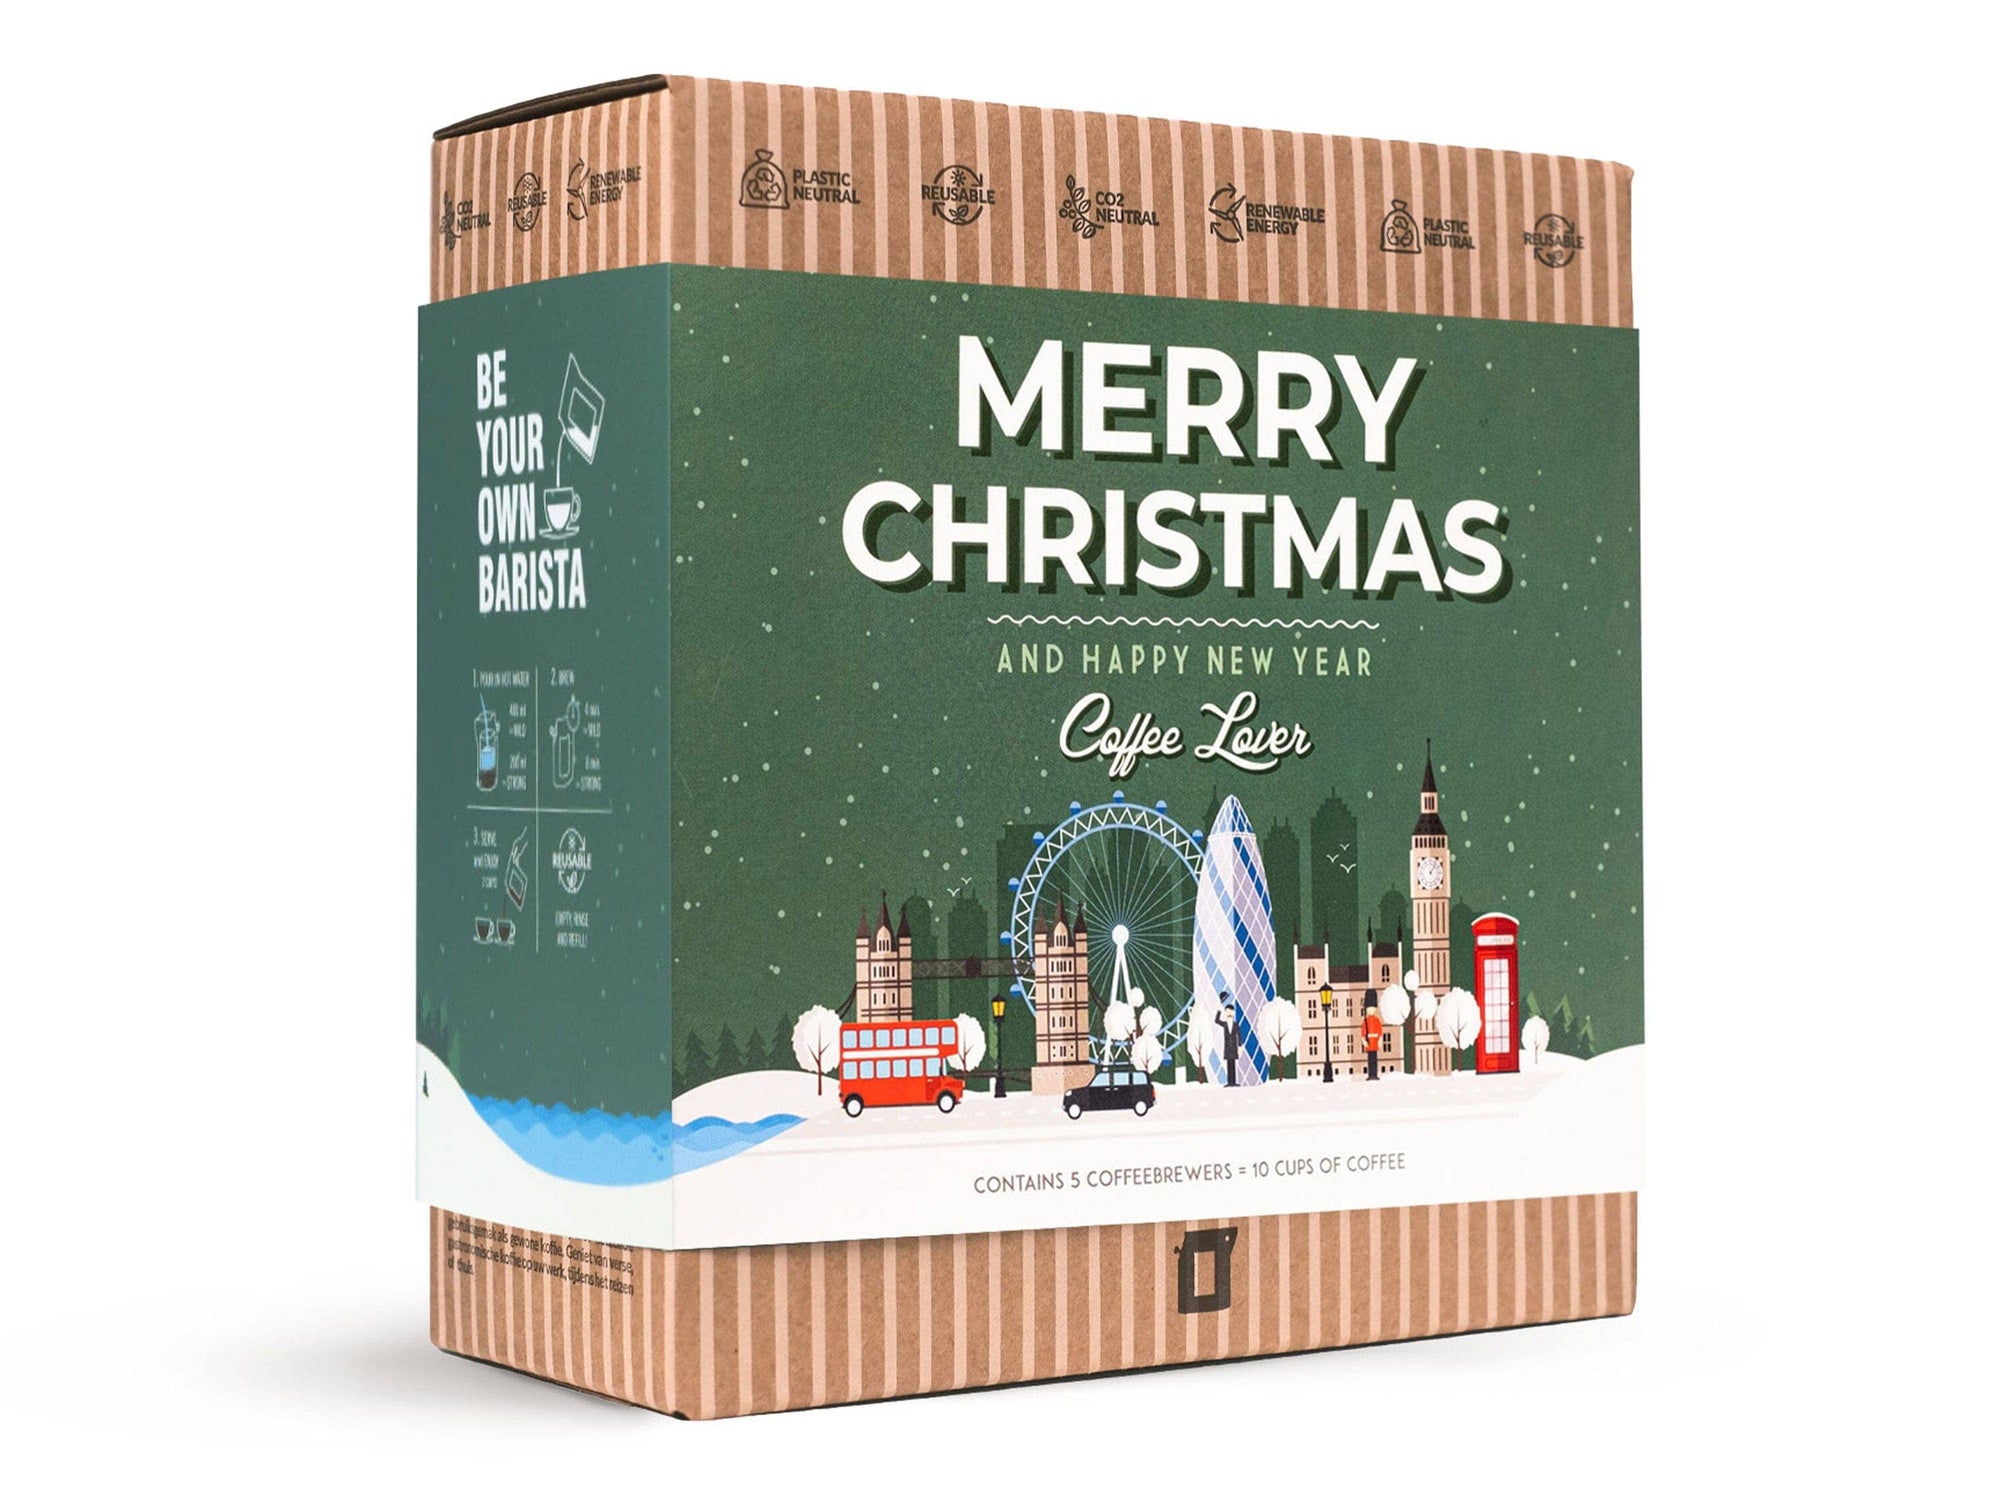 MERRY CHRISTMAS GIFT BOX 5 Pcs The Brew Company